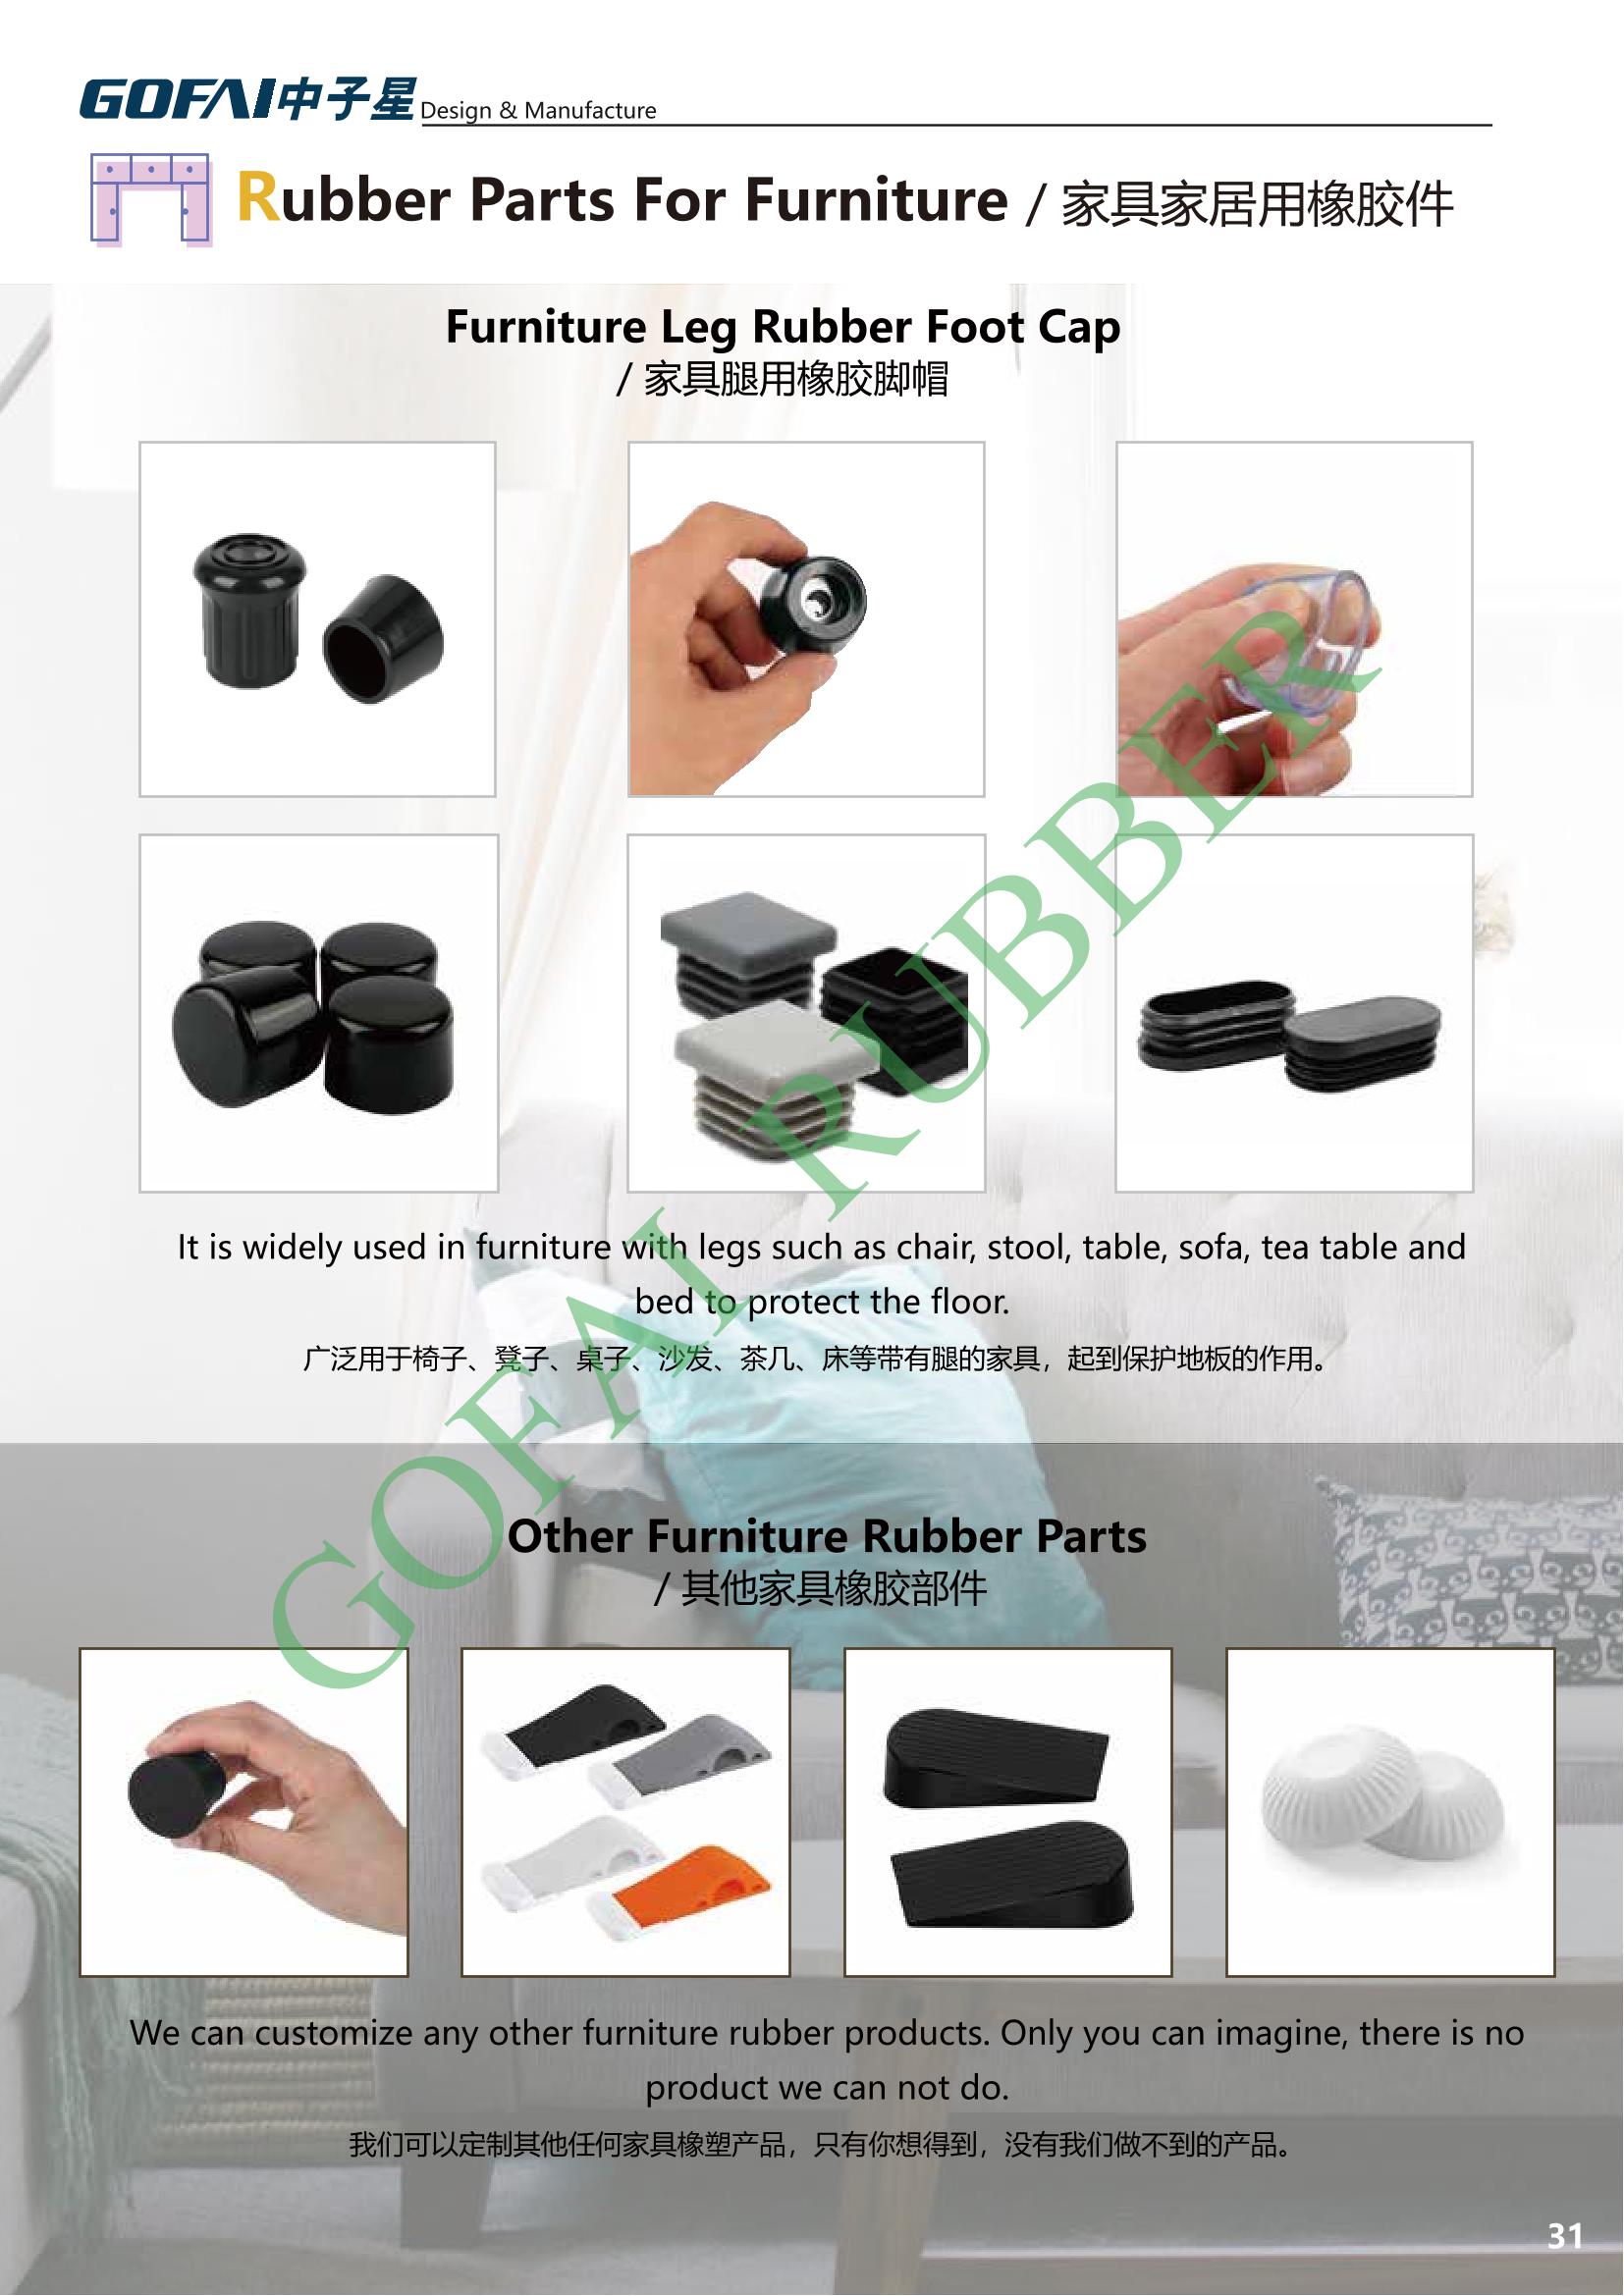 GOFAI rubberplastic products cataloge_31.jpg